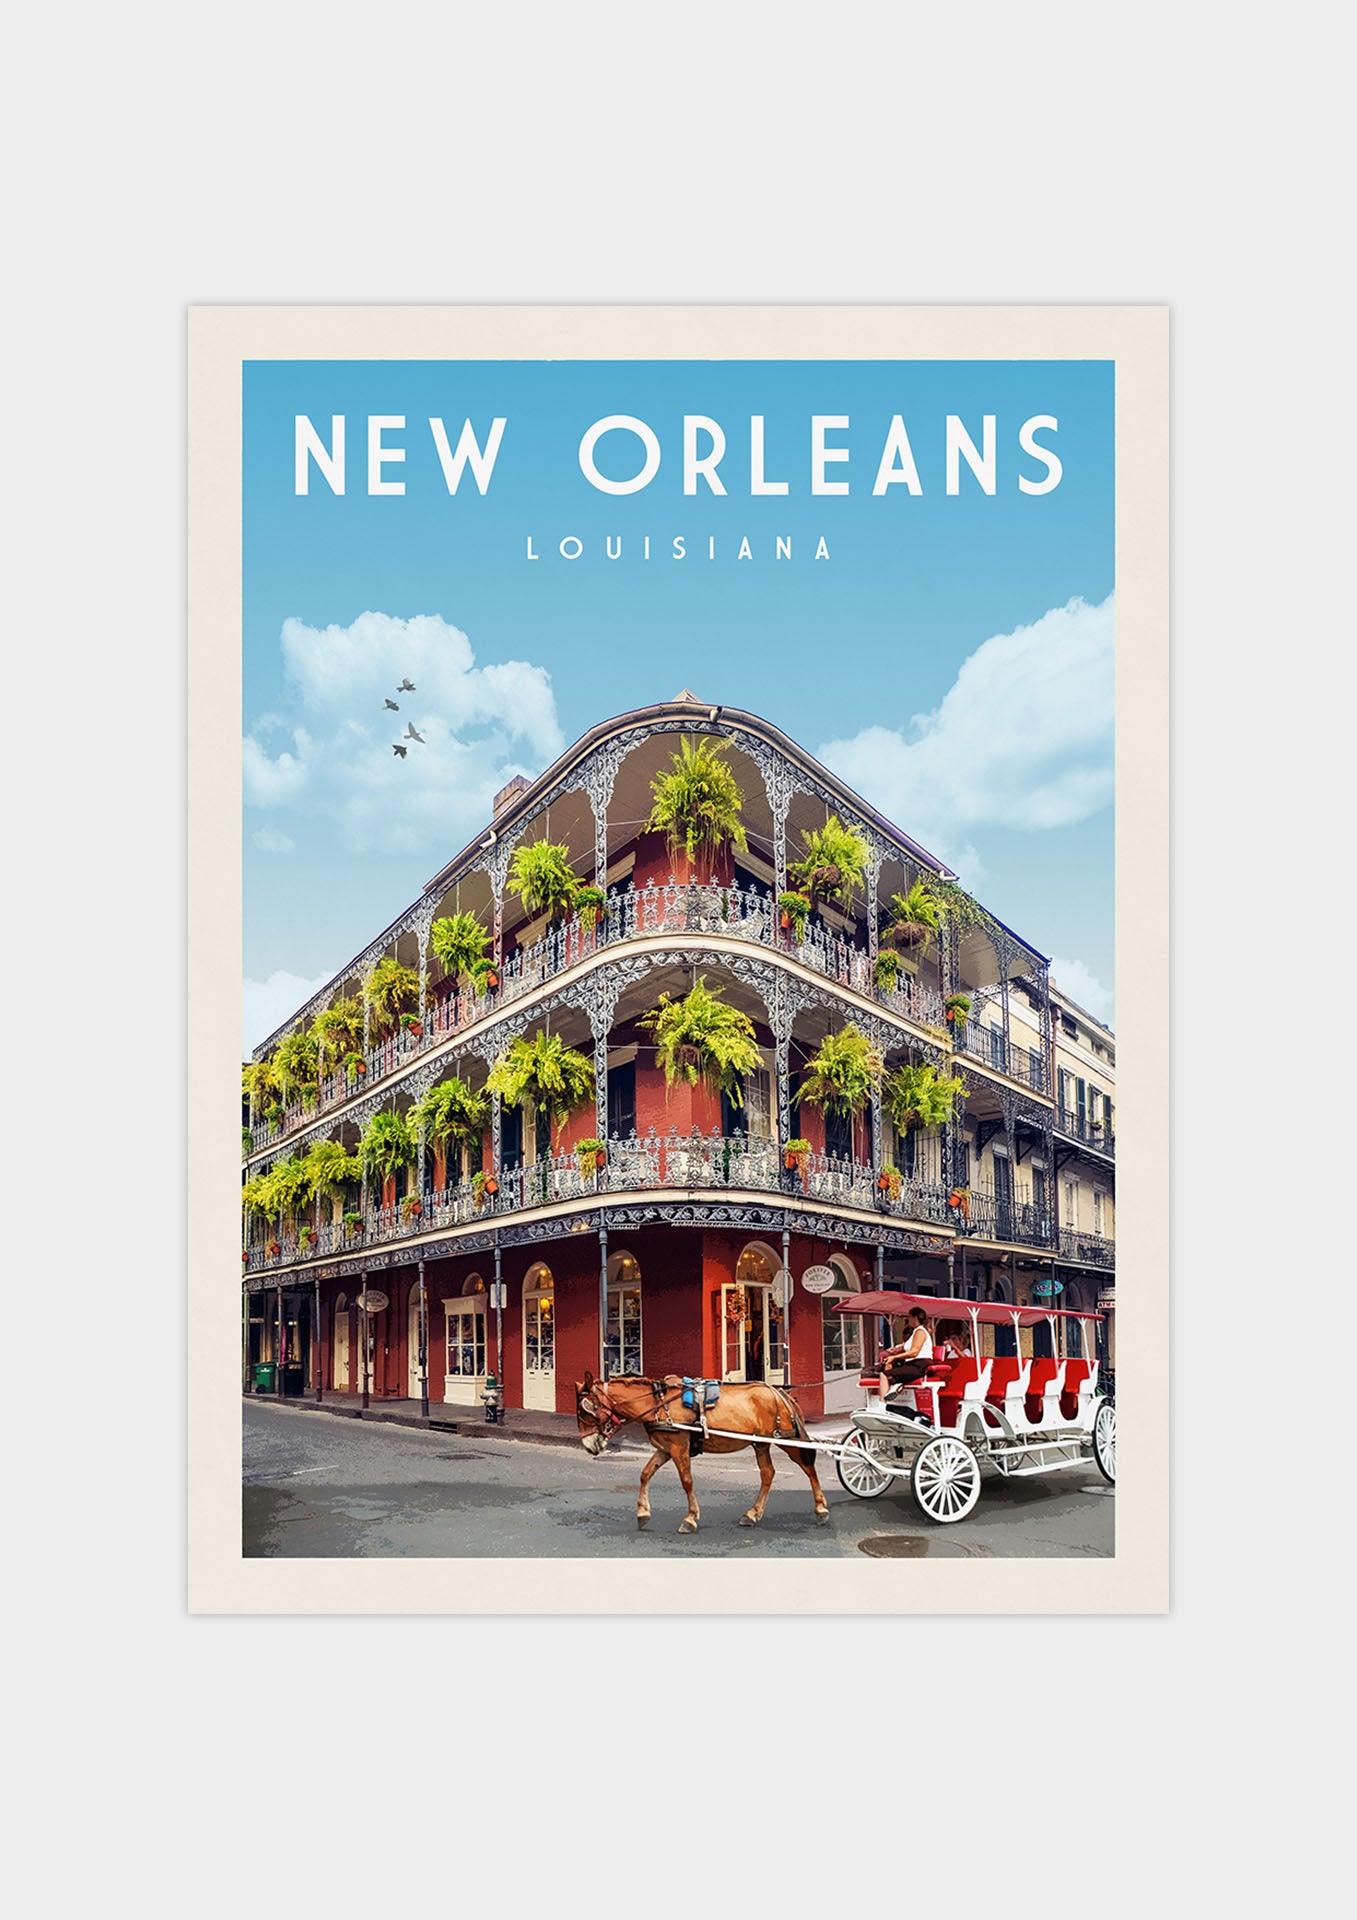 New Orleans, Louisiana, Tourism Information